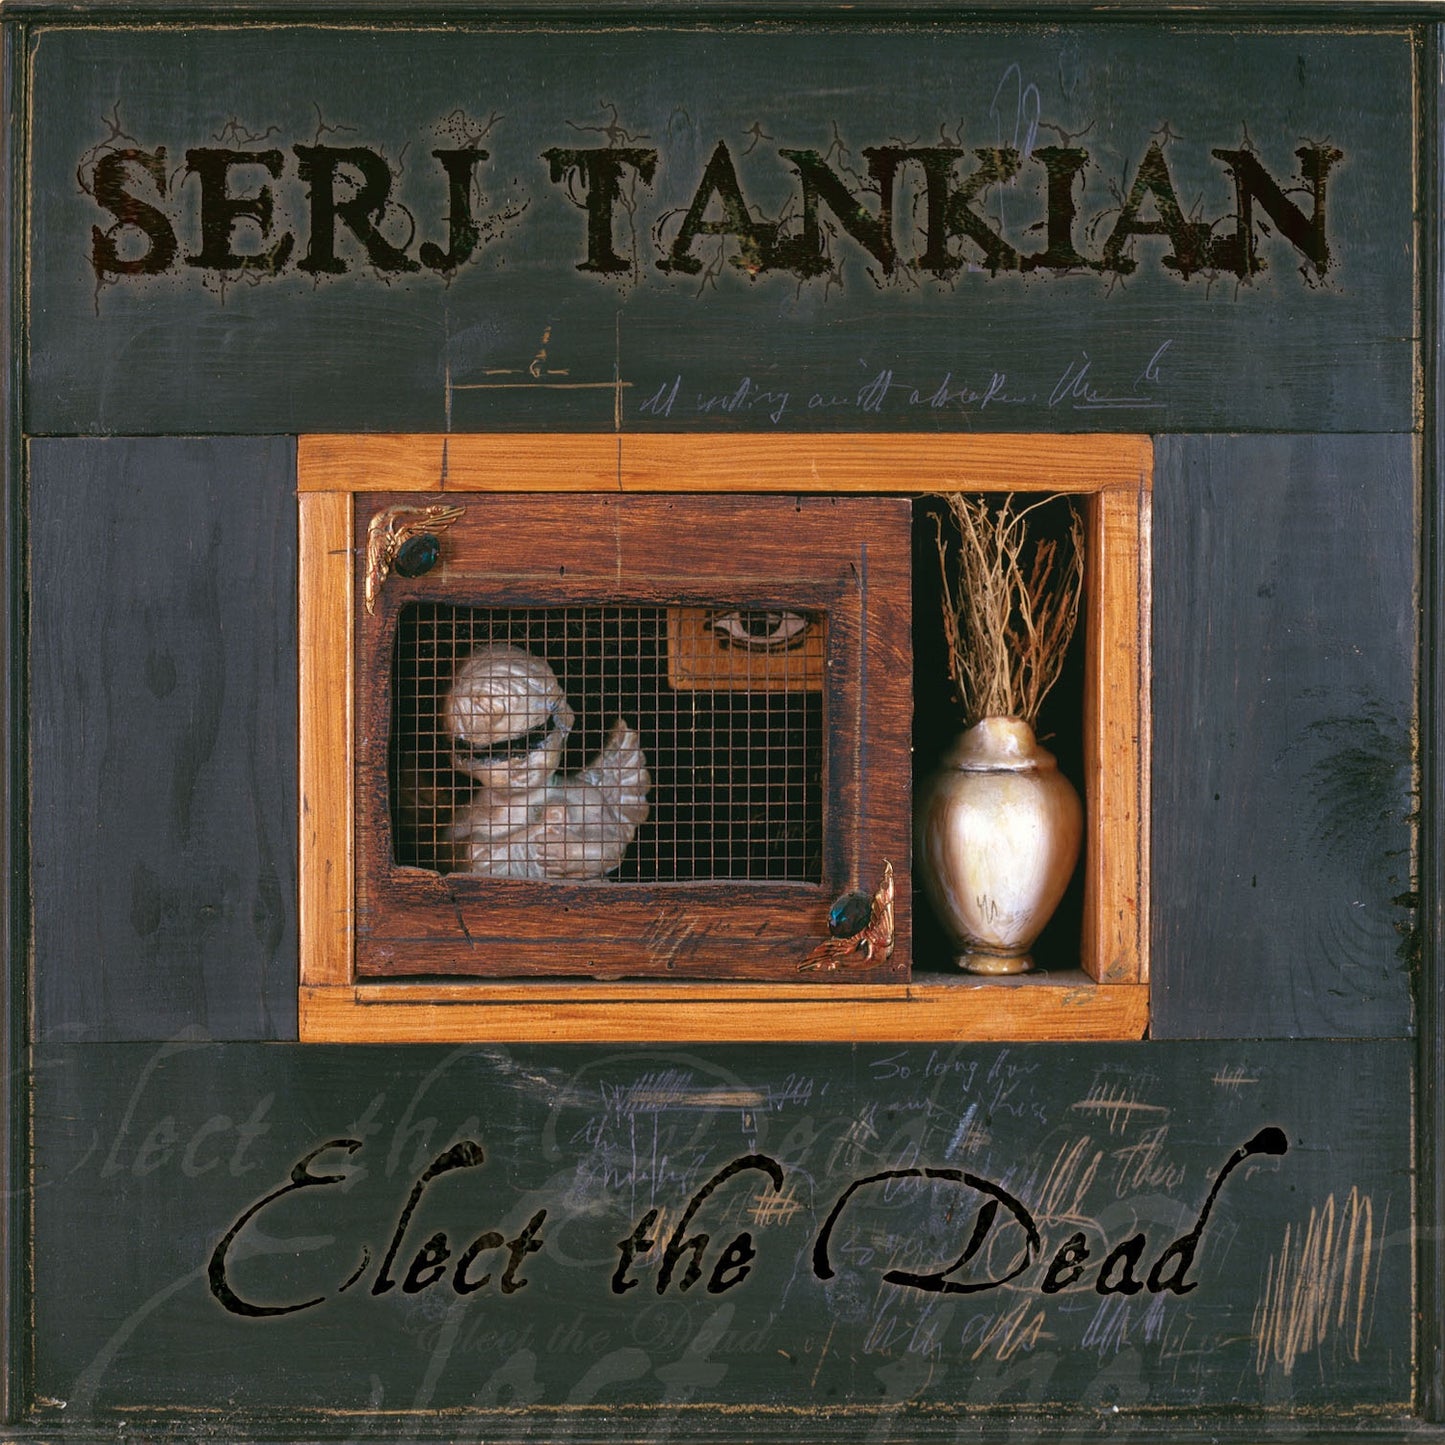 Serj Tankian - Elect The Dead (Marble Smoke Version)